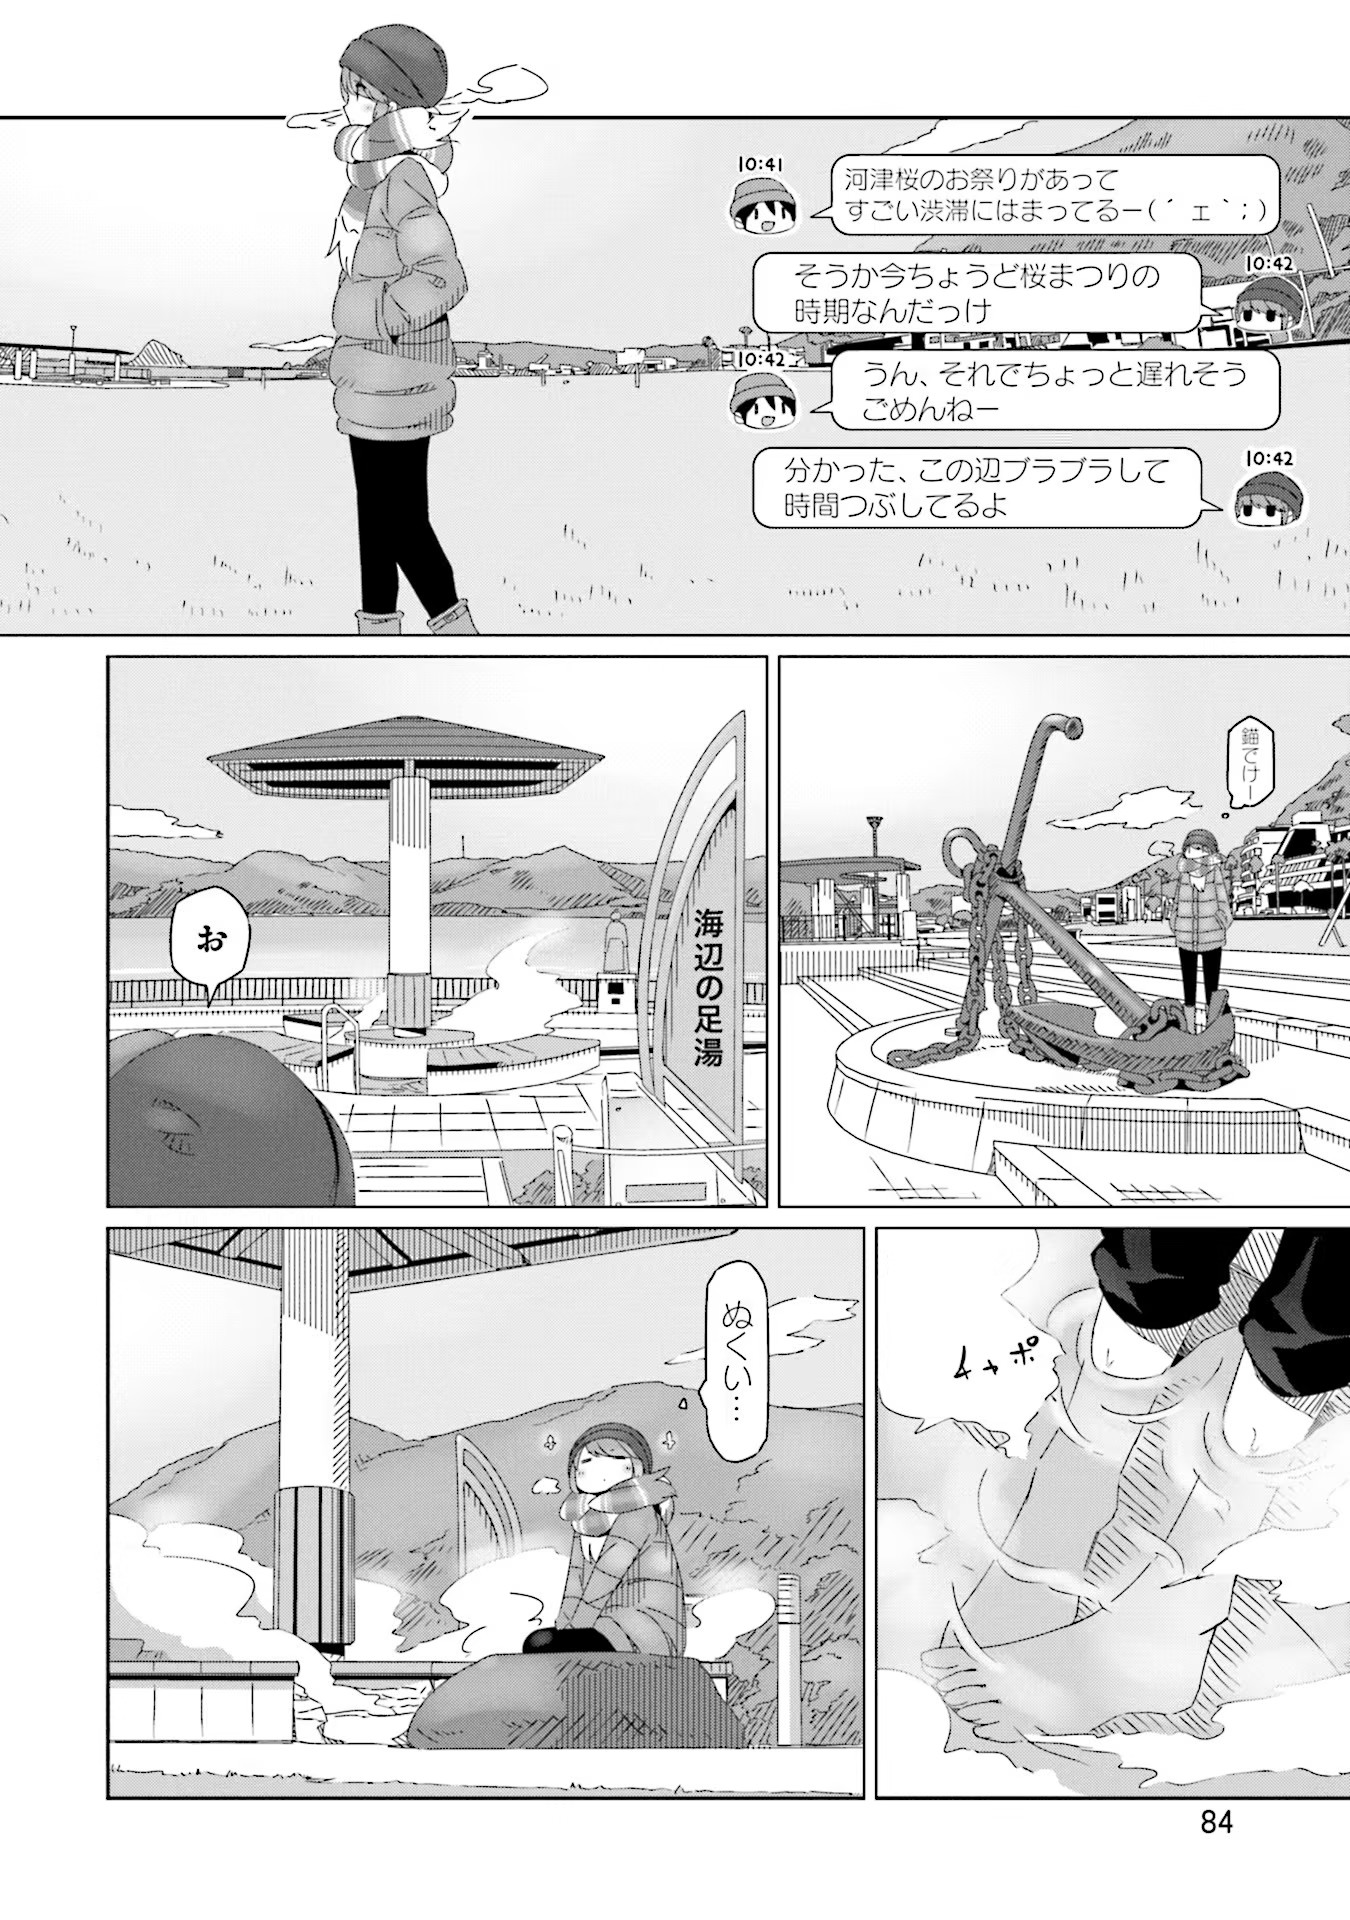 Yuru Camp - Chapter 44 - Page 4